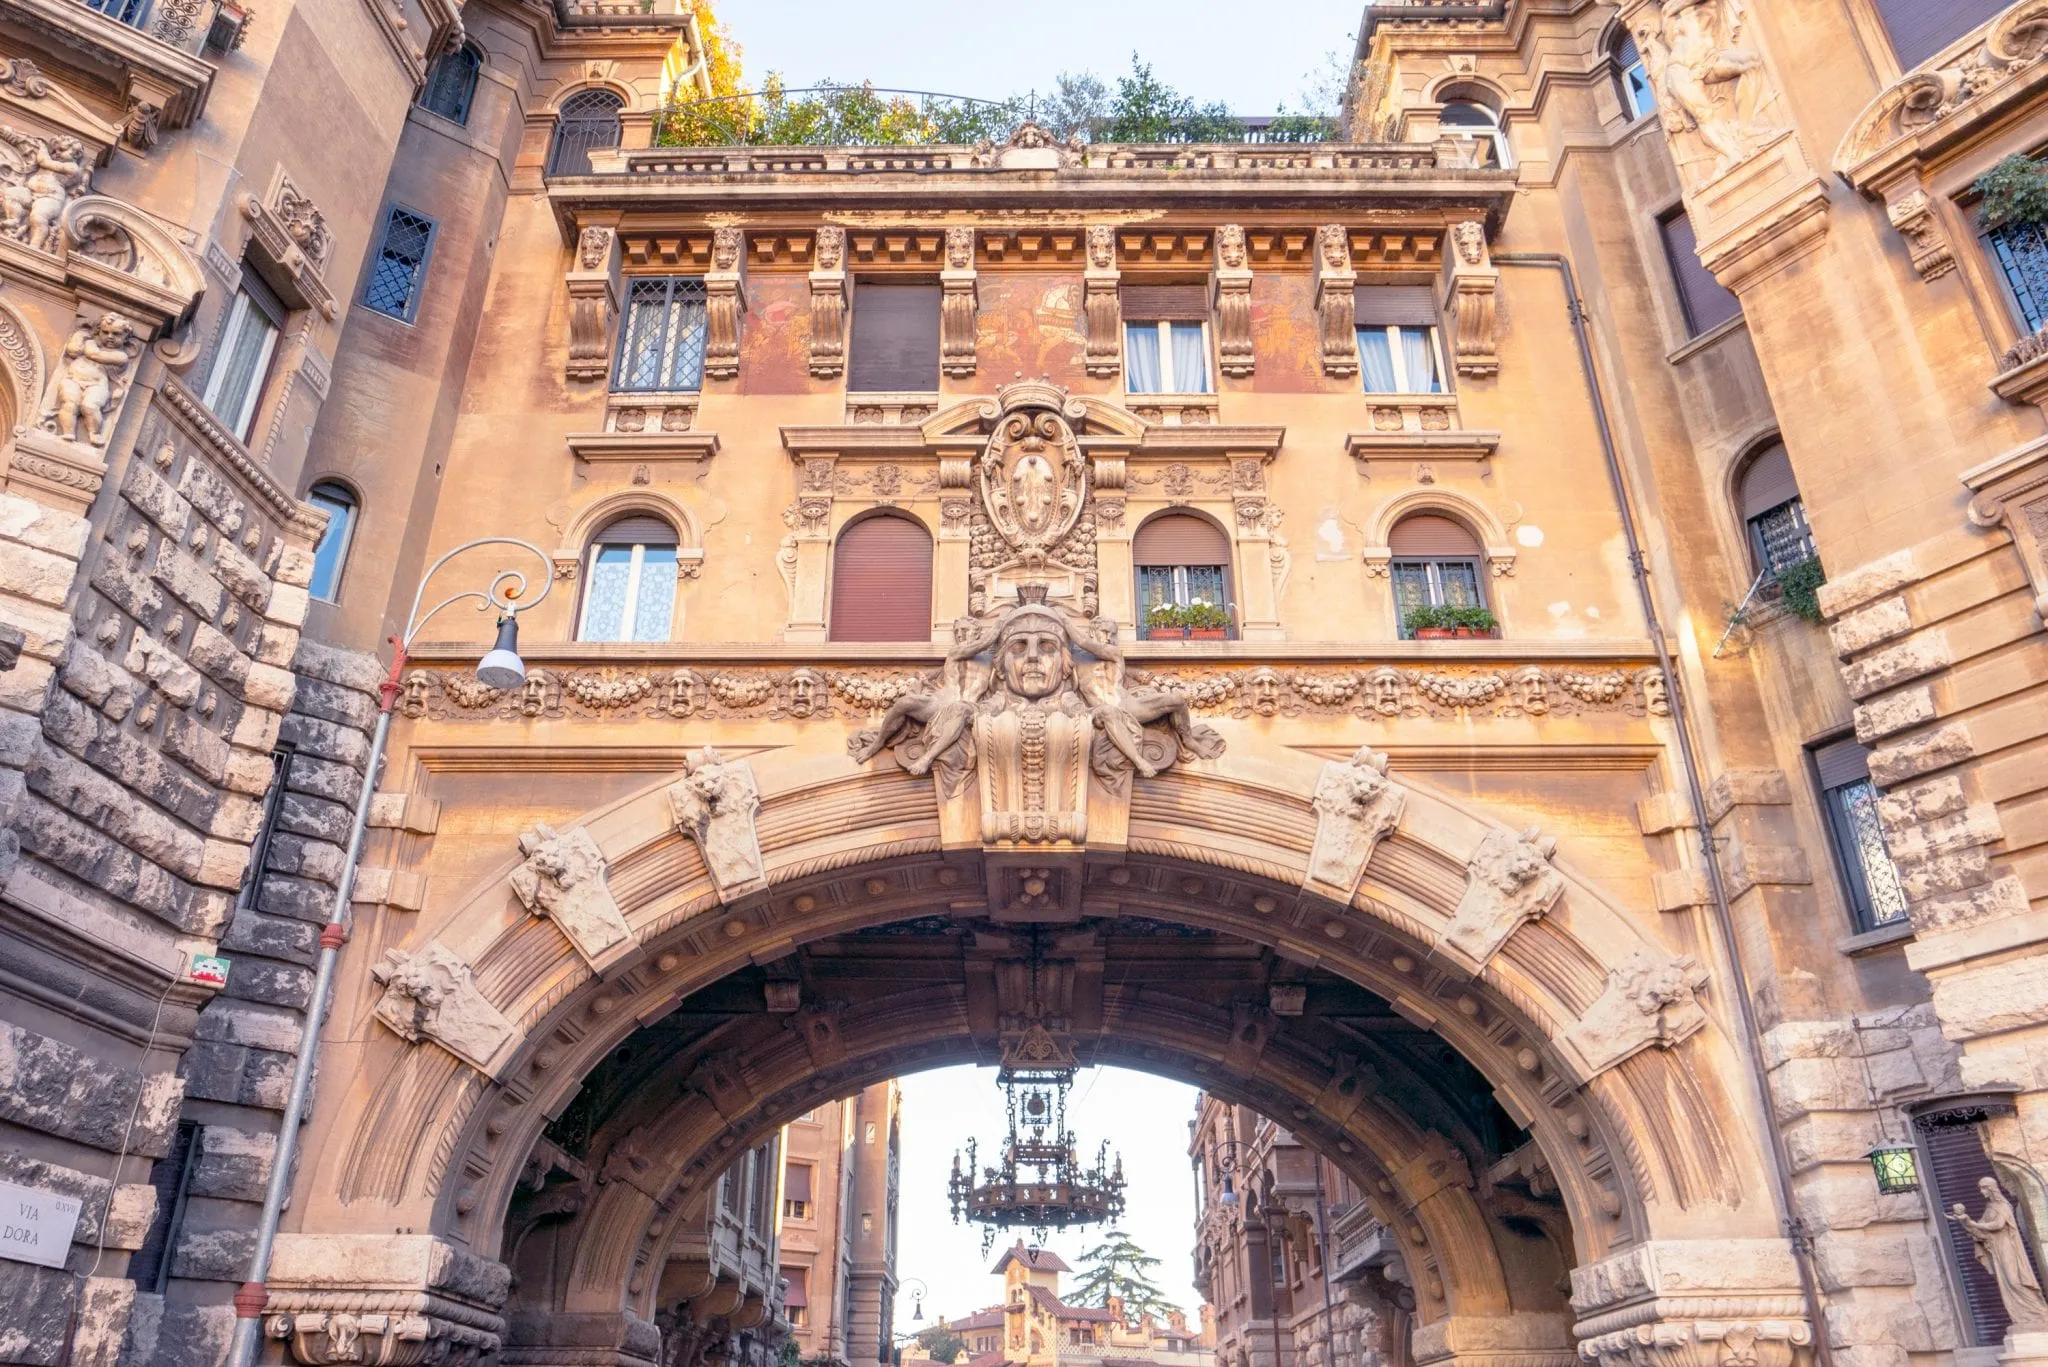 Close-up photo of Quartiere Coppedè entrance gate in Rome.